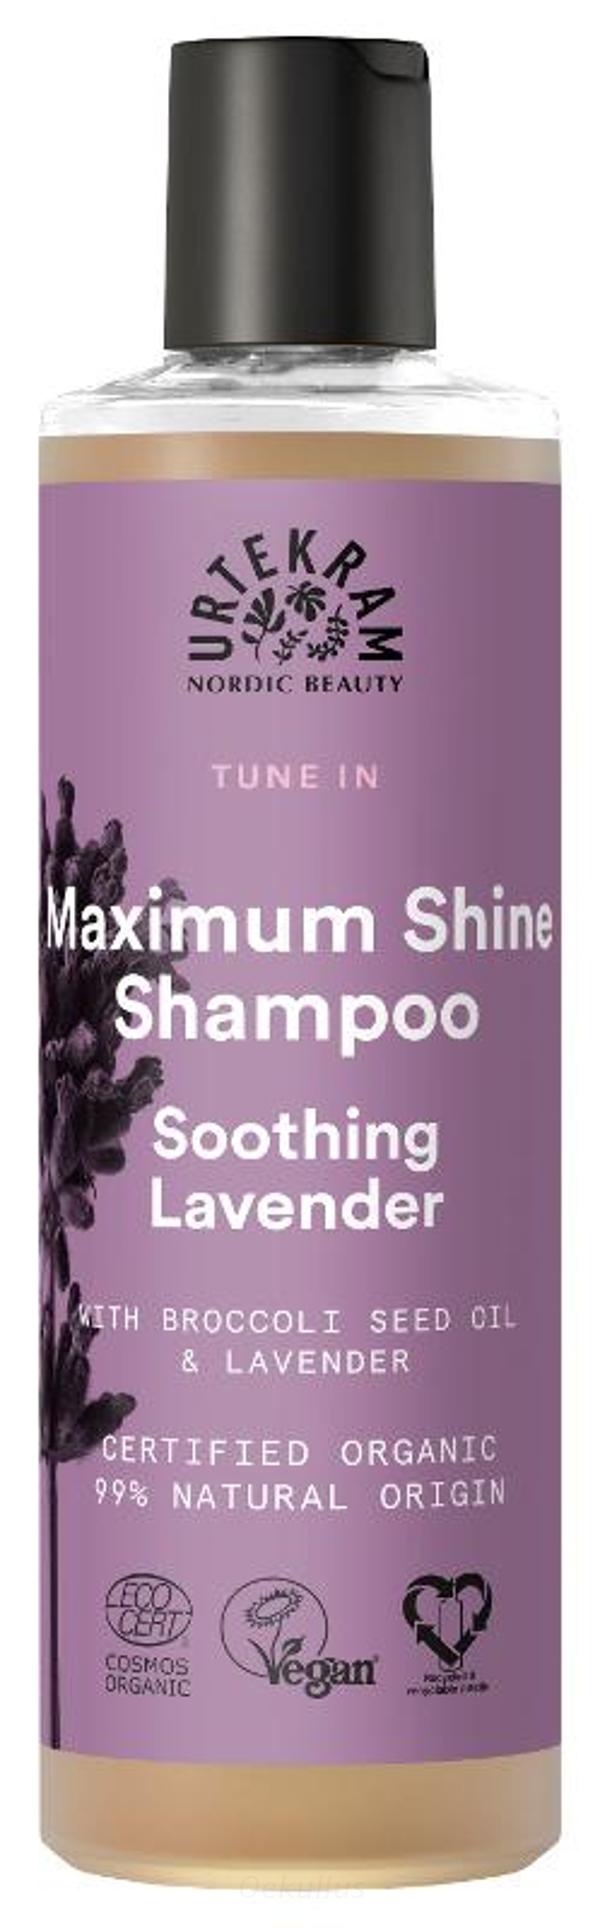 Produktfoto zu Maximum Shine Shampoo